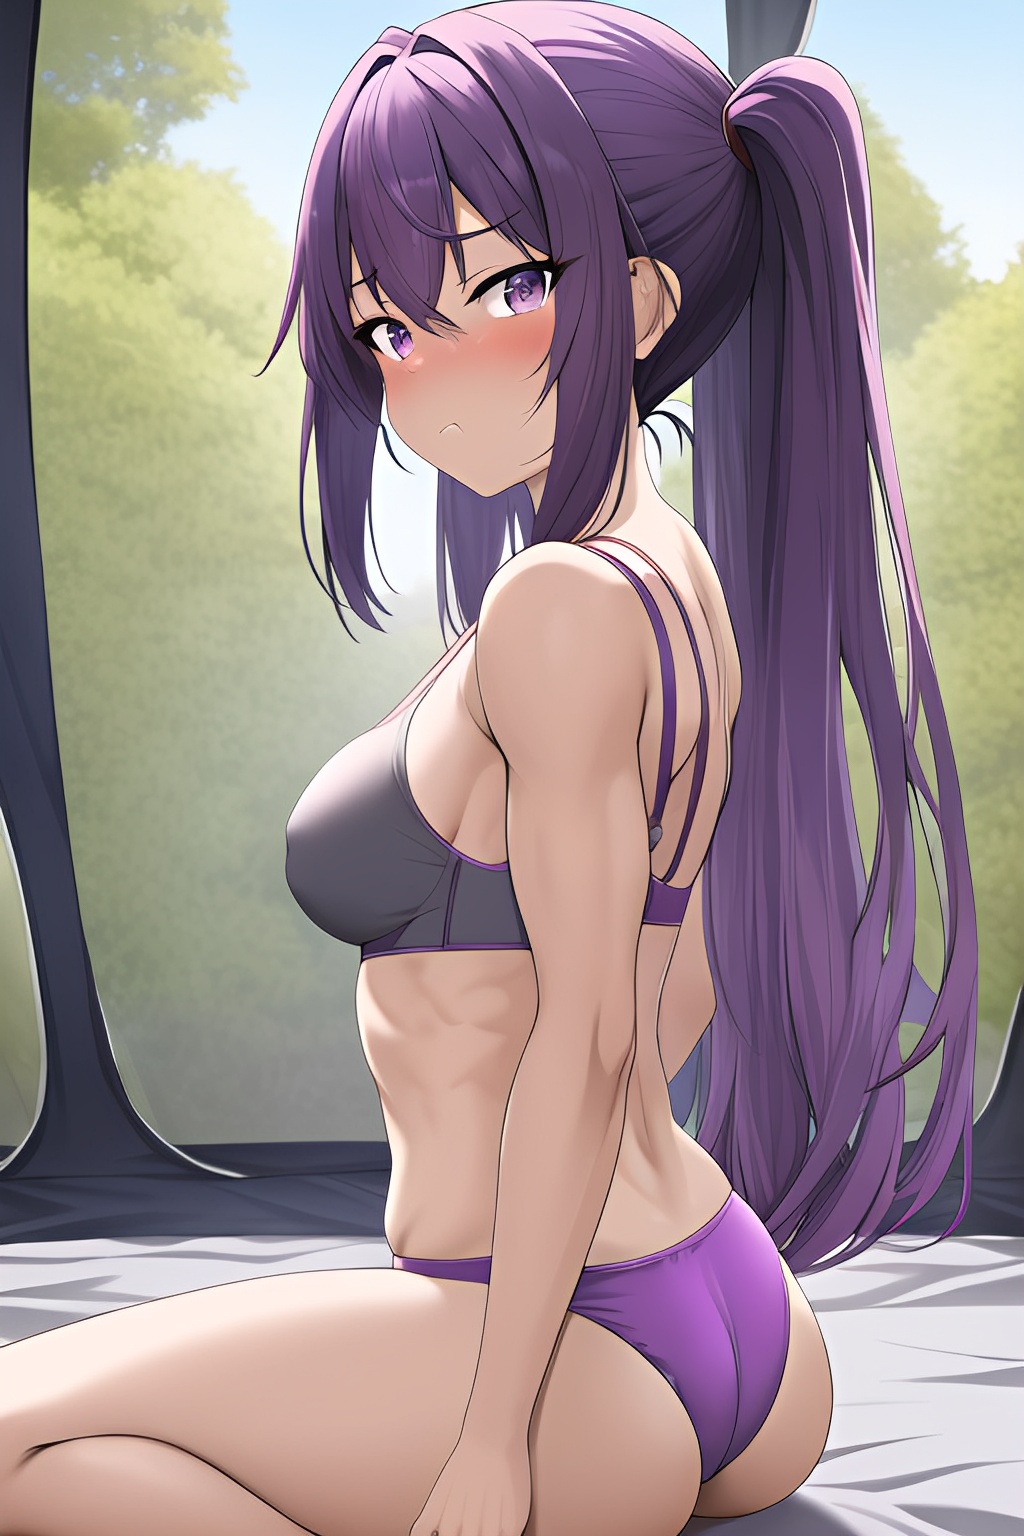 Anime Muscular Small Tits 40s Age Sad Face Purple Hair Bangs Hair Style